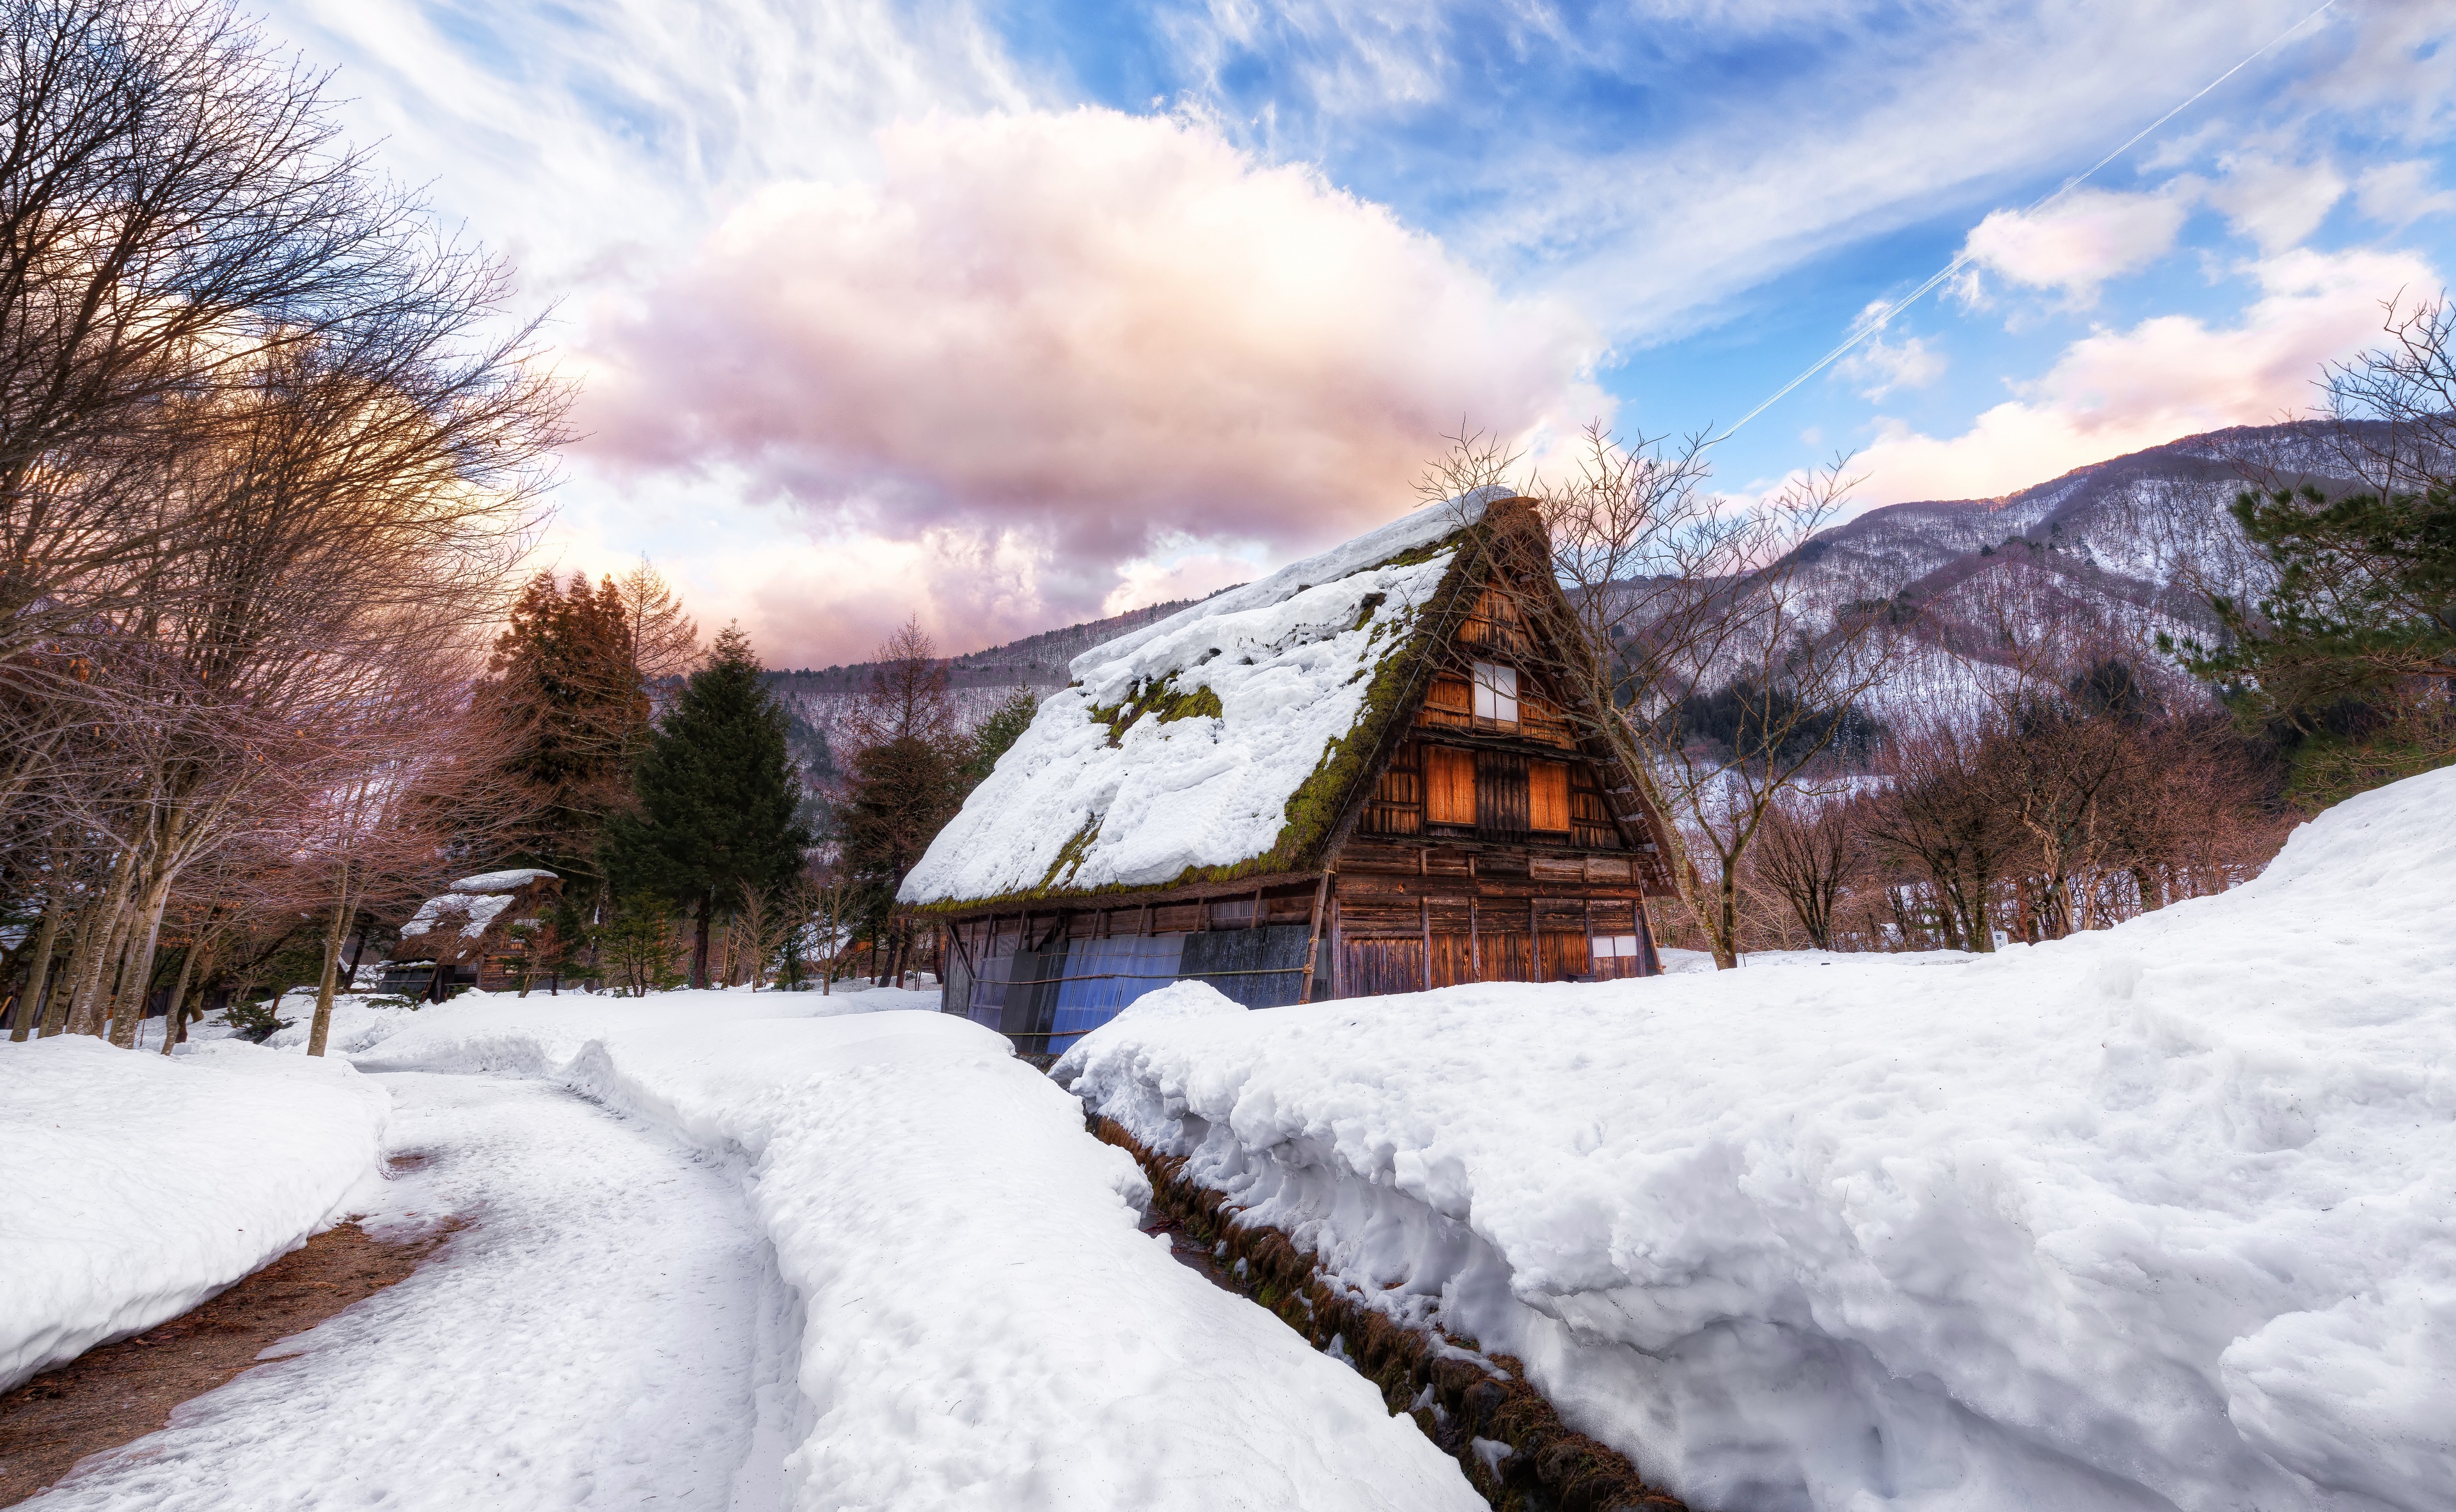 Снежка домики. Винтер Виледж. Горная деревня Япония зима. Зимняя деревня. Деревня зимой.